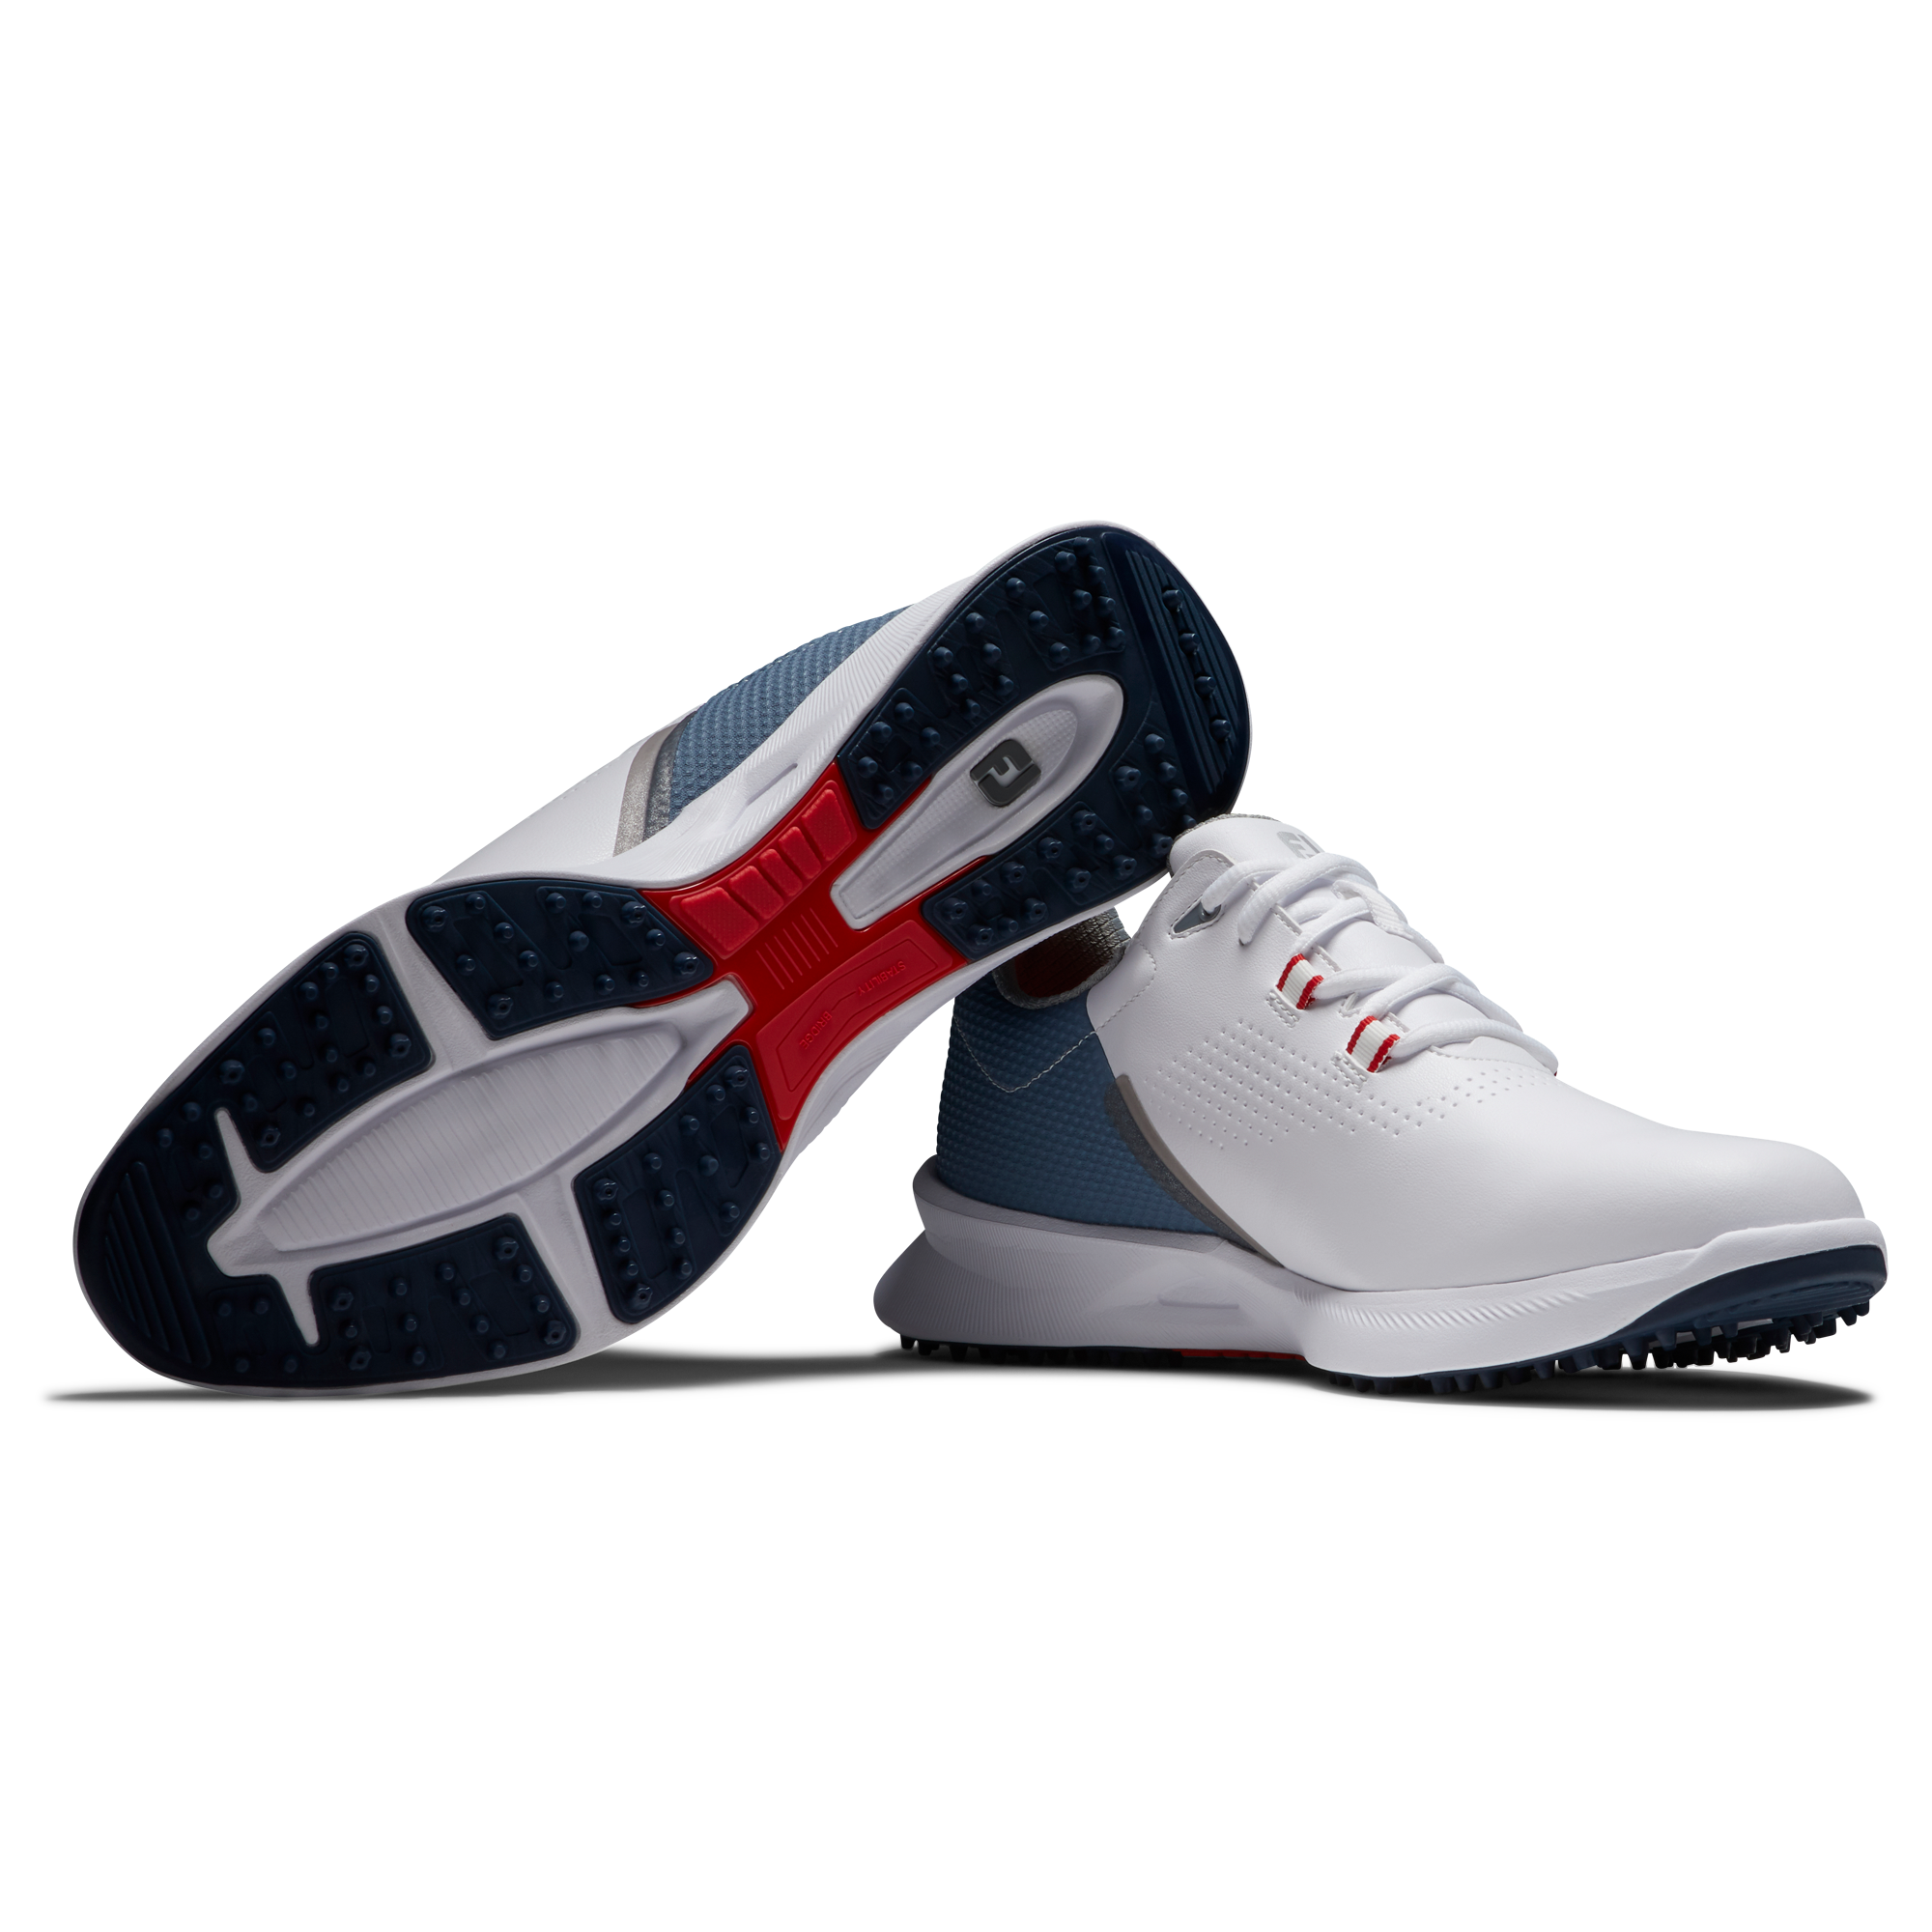 Fuel Men's Golf Shoe (Previous Season Style)